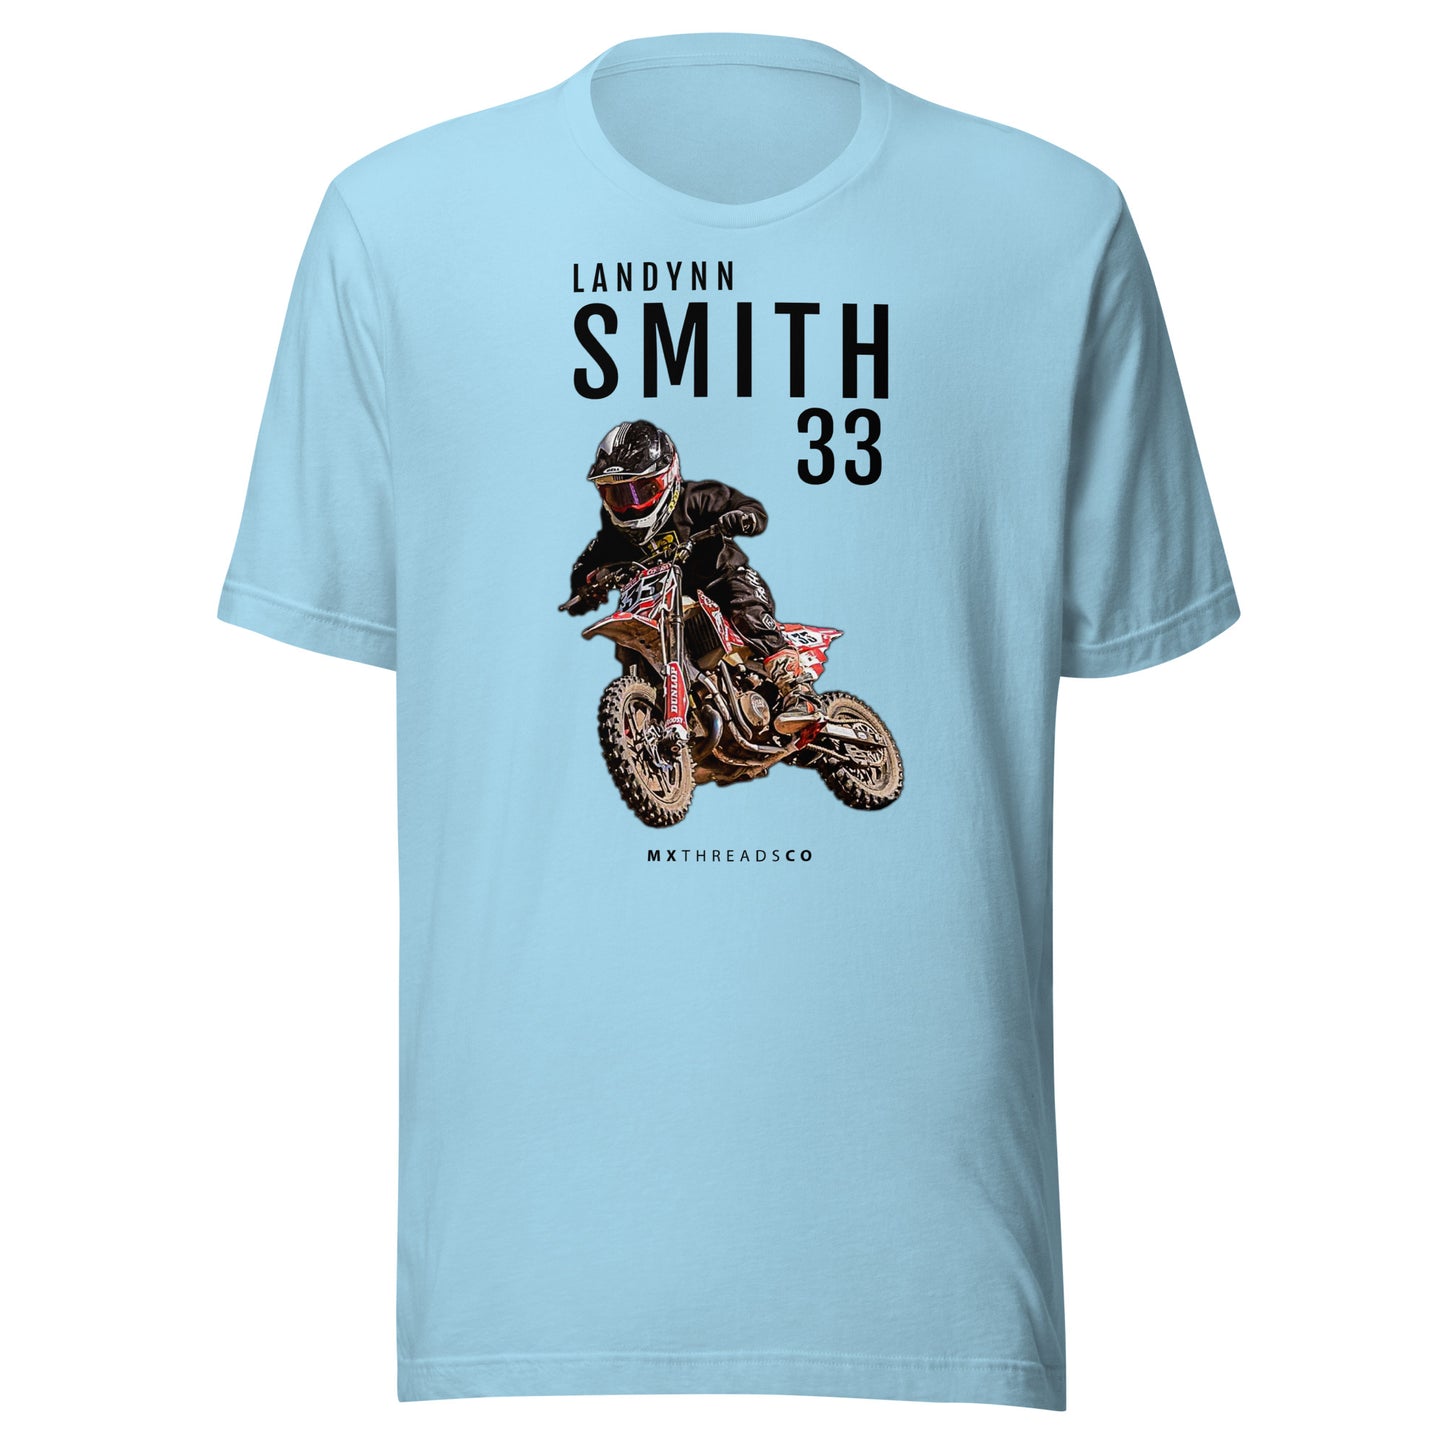 Landynn Smith Photo-Graphic Series T-Shirt